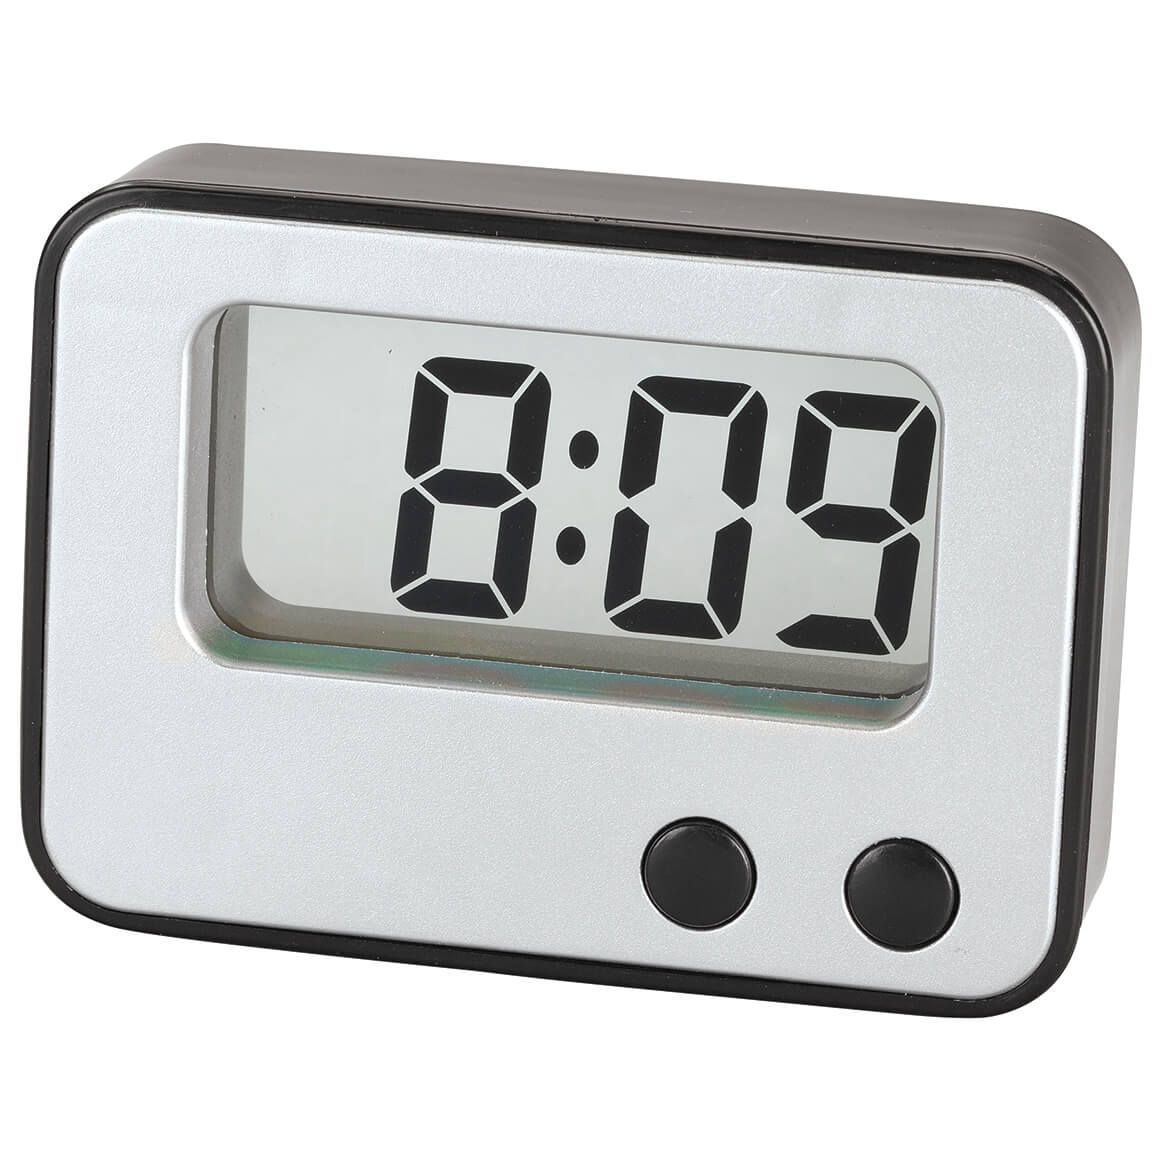 LCD Digital Alarm Clock + '-' + 378106